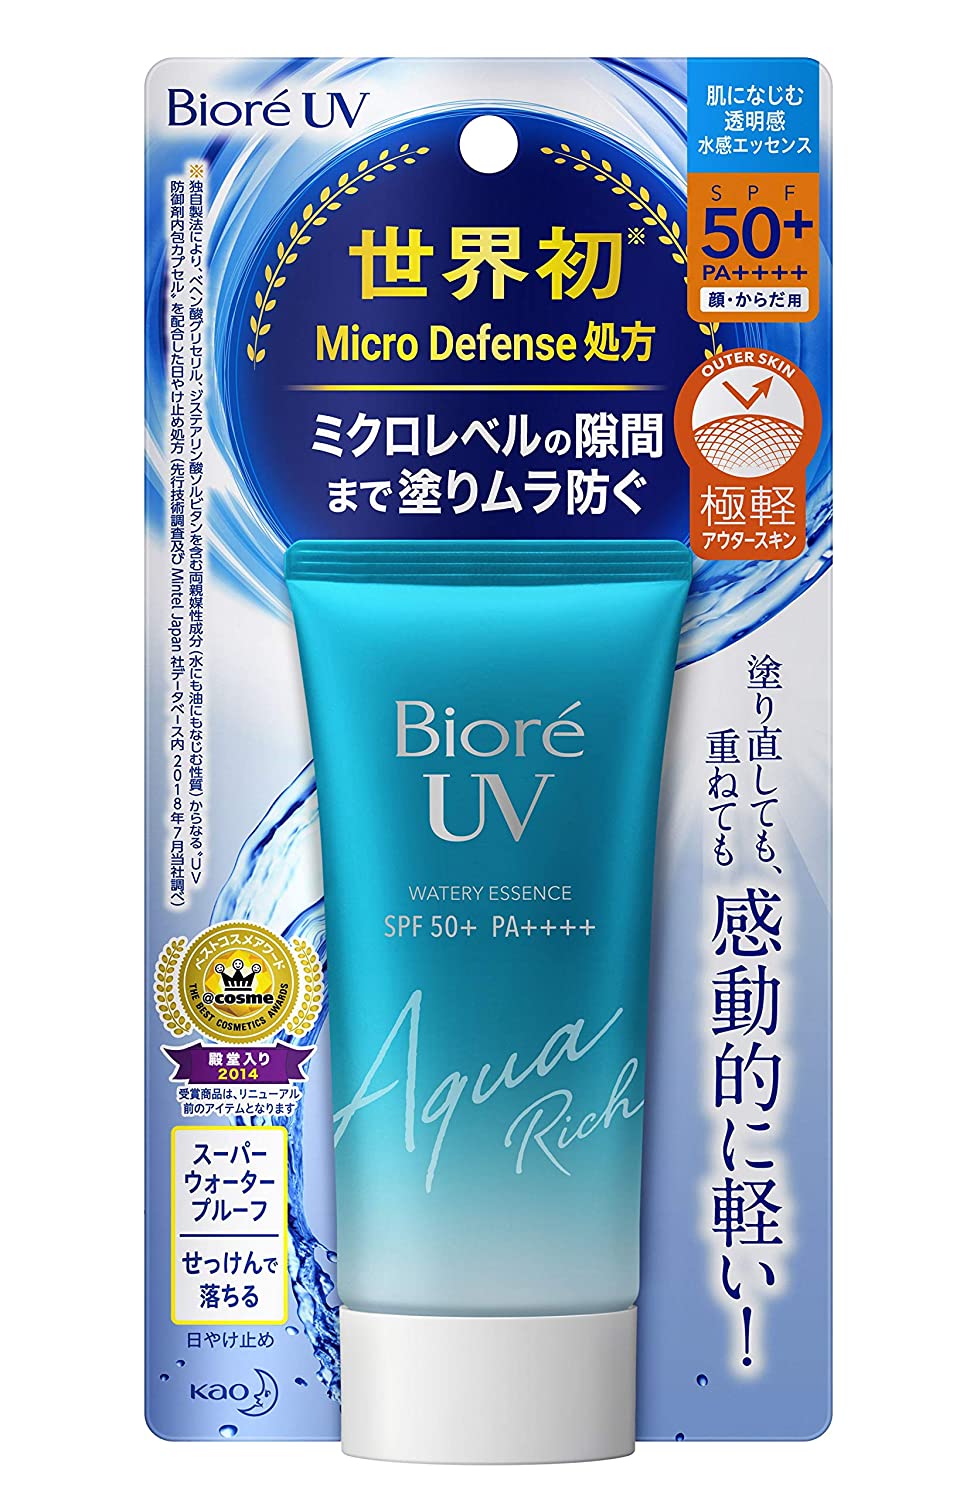 Kao Biore Japan Aqua Rich Watery Essence Sunblock Sunscreen Blue 